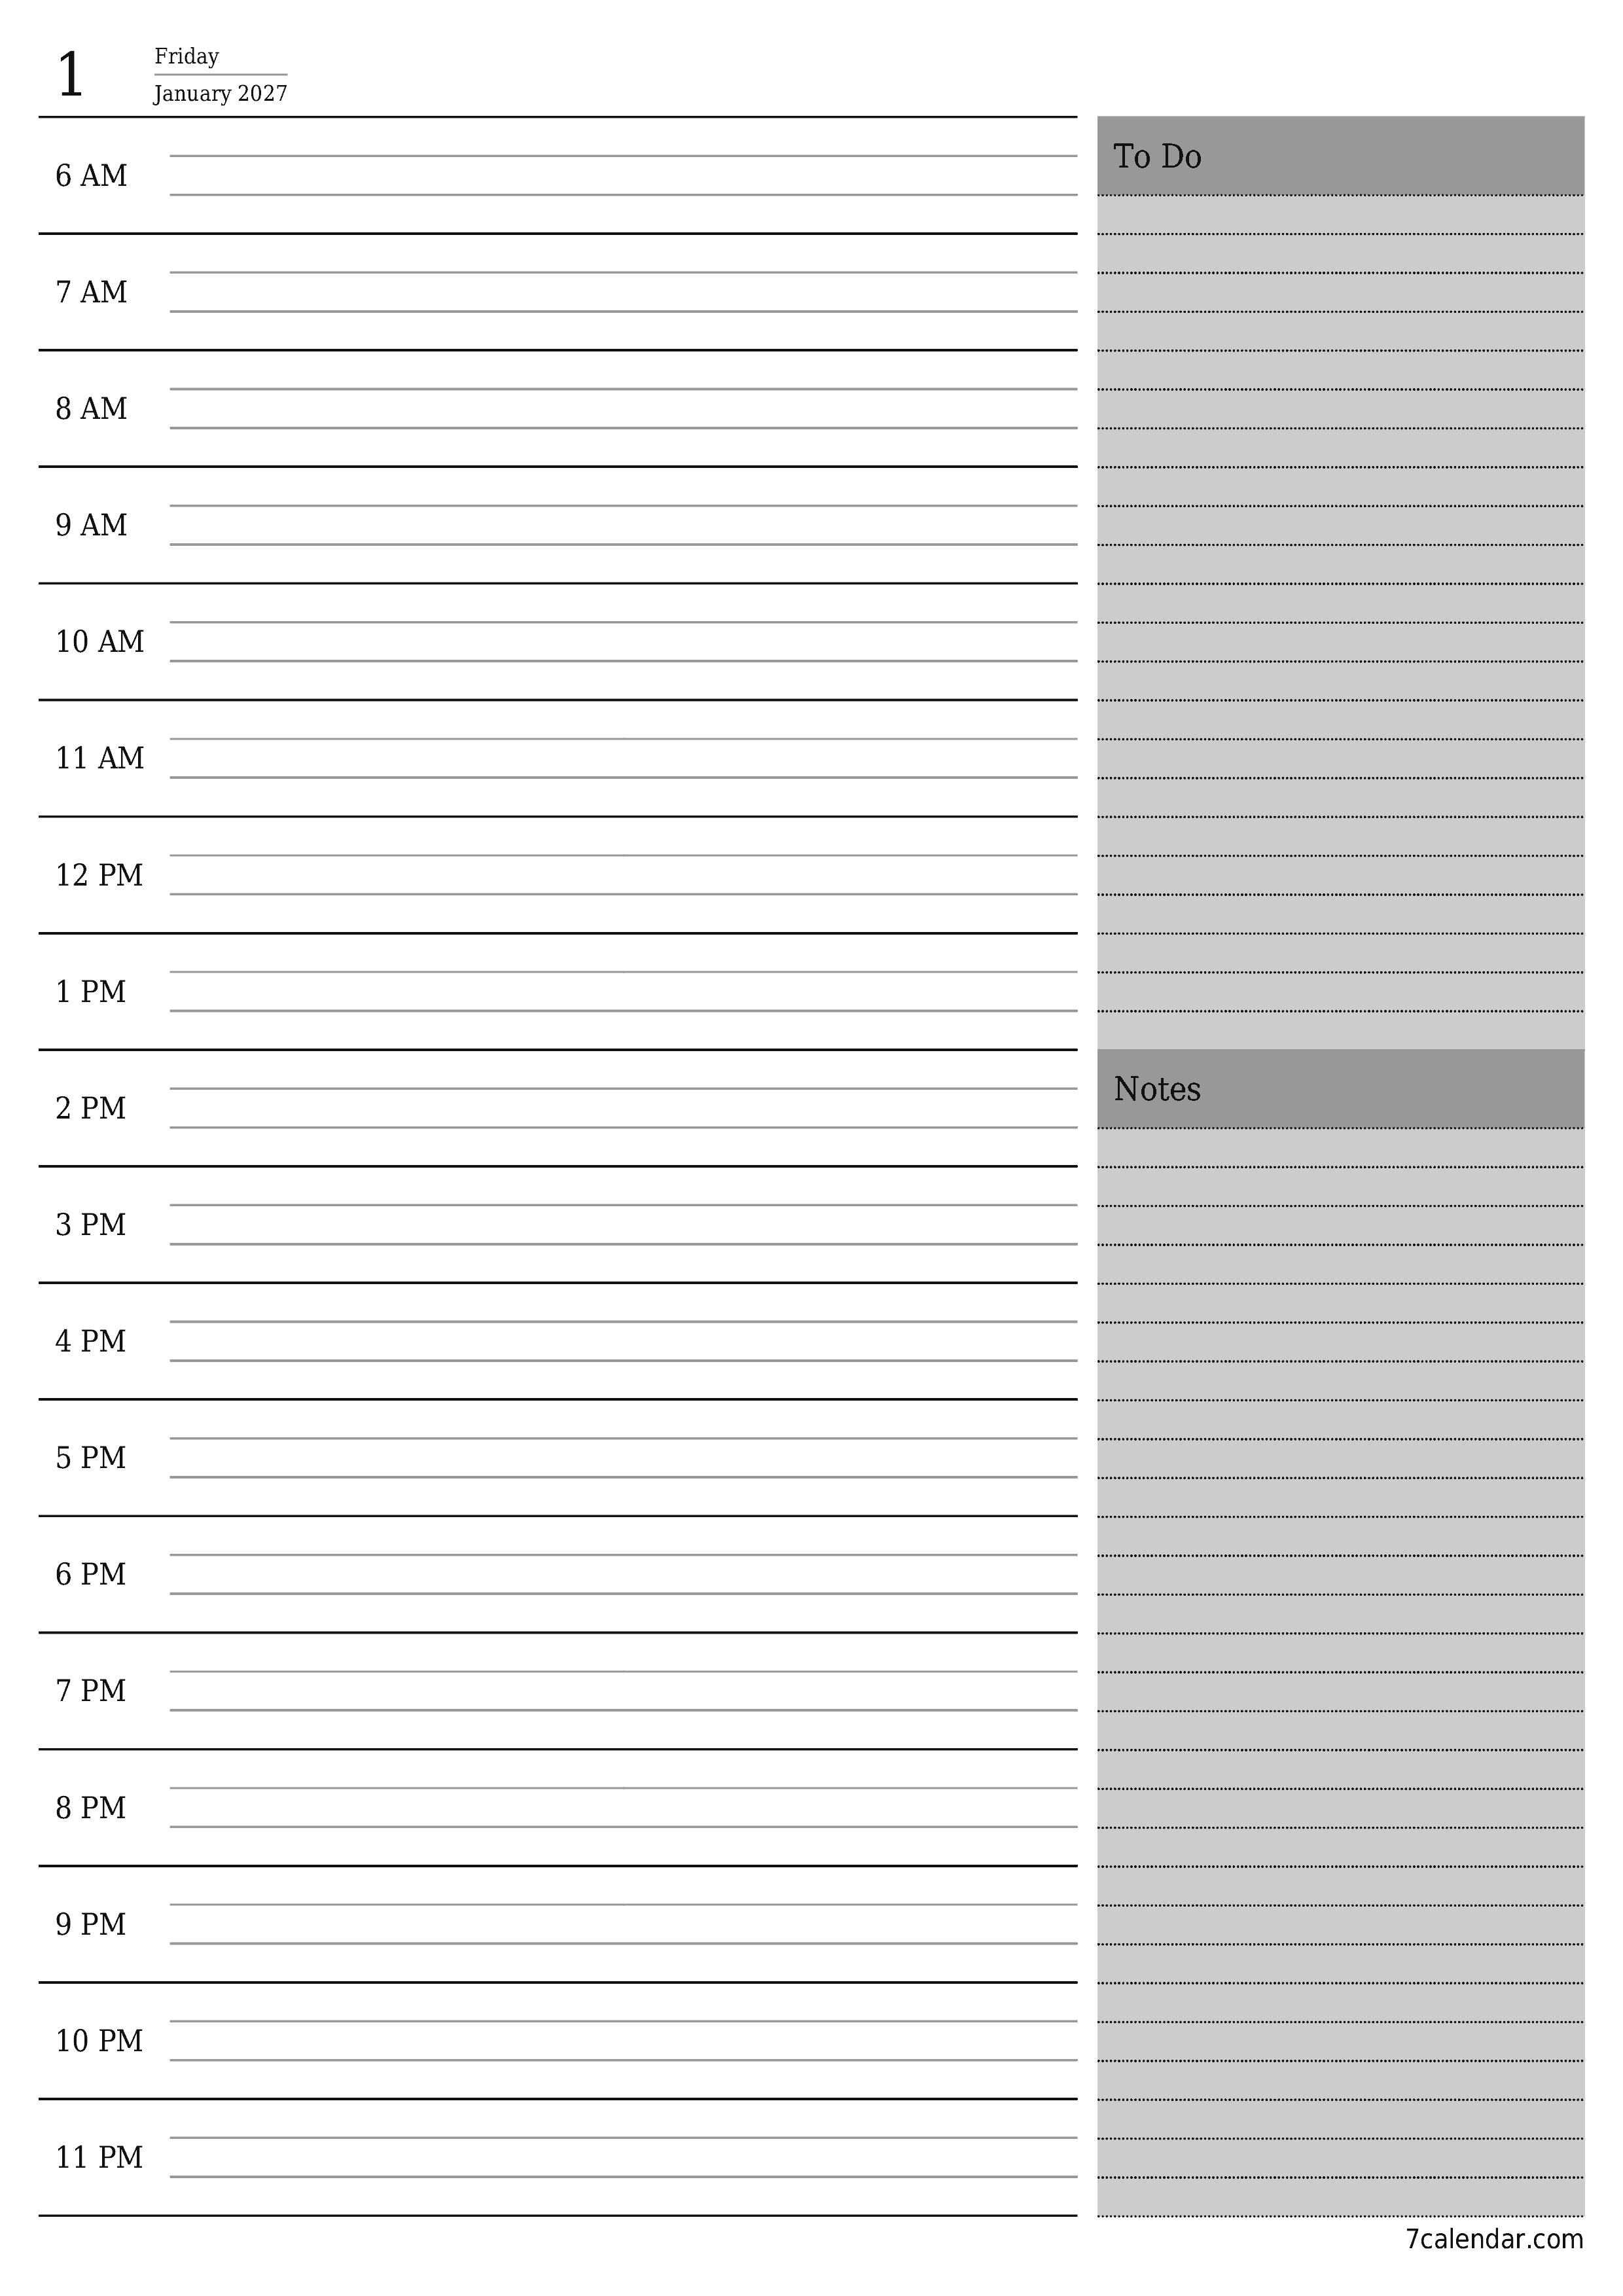 Blank calendar January 2027